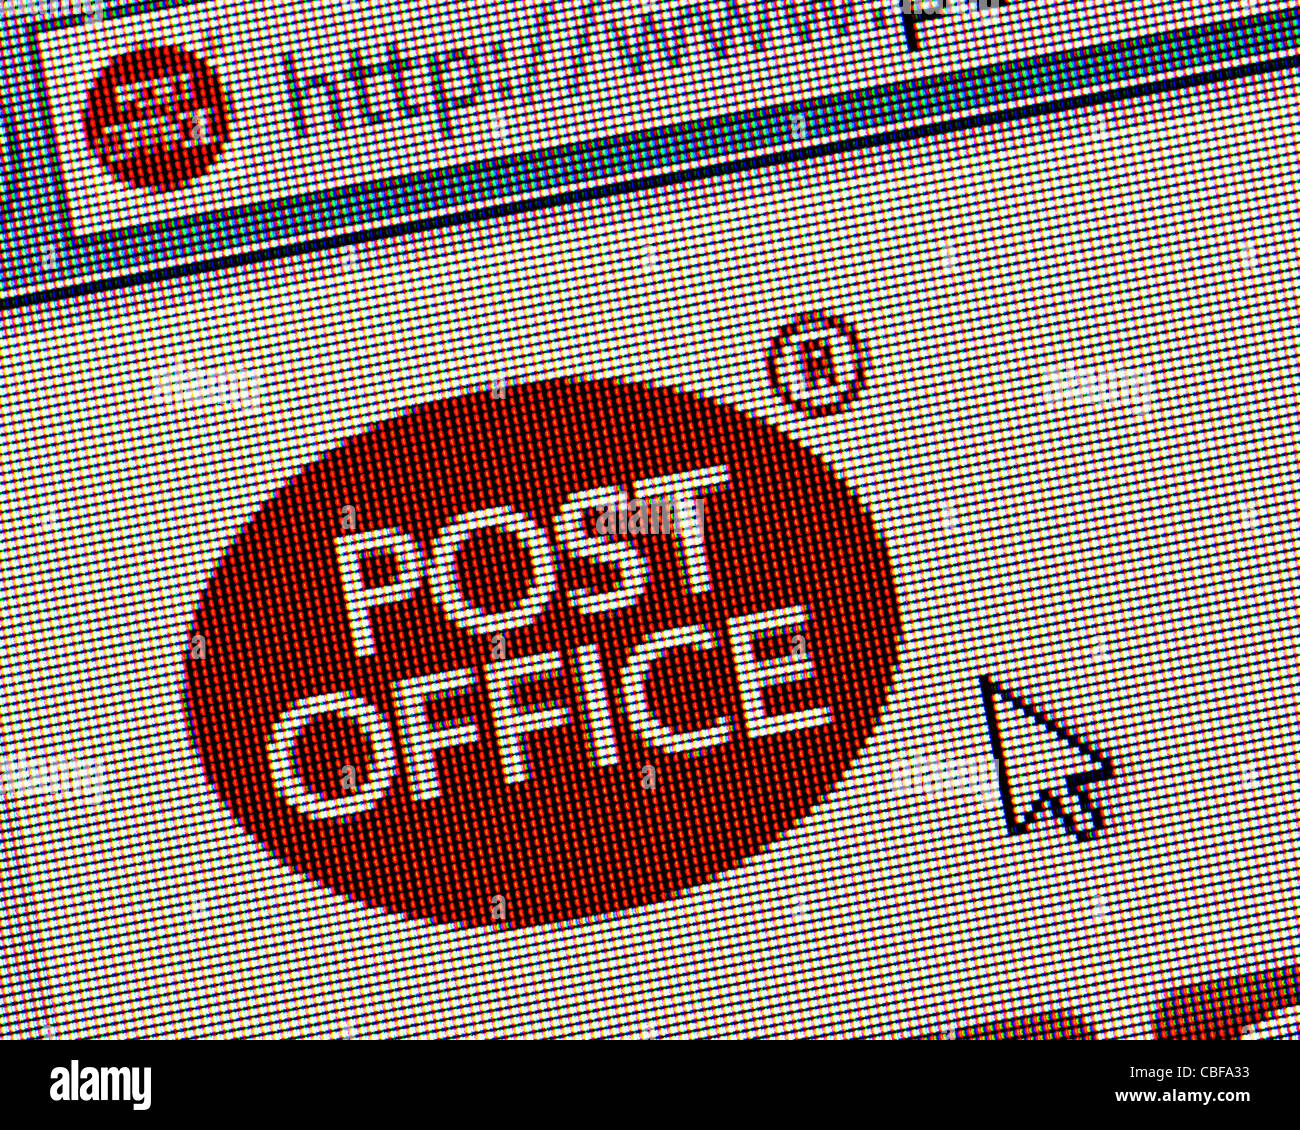 Post Office UK logo e sito web close up Foto Stock